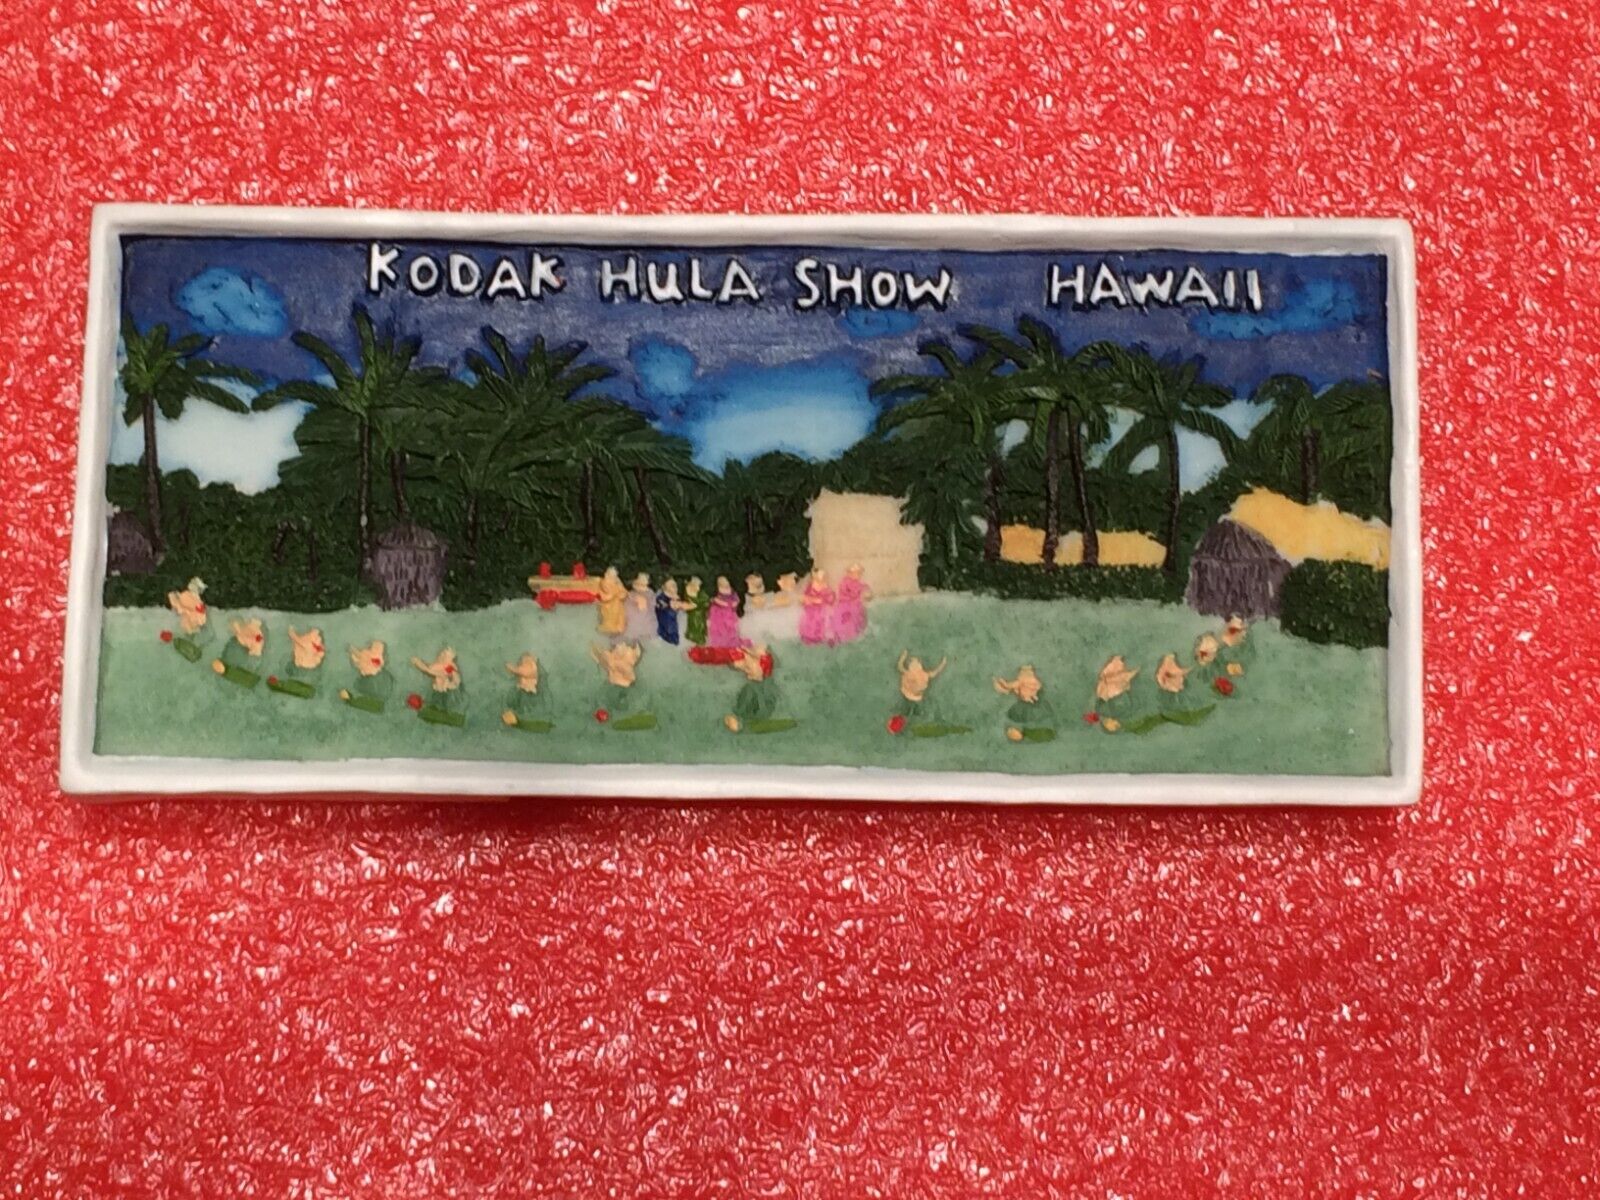 Hawaii Fridge Refrigerator Magnets Kodak Hula Show Box of 24pcs